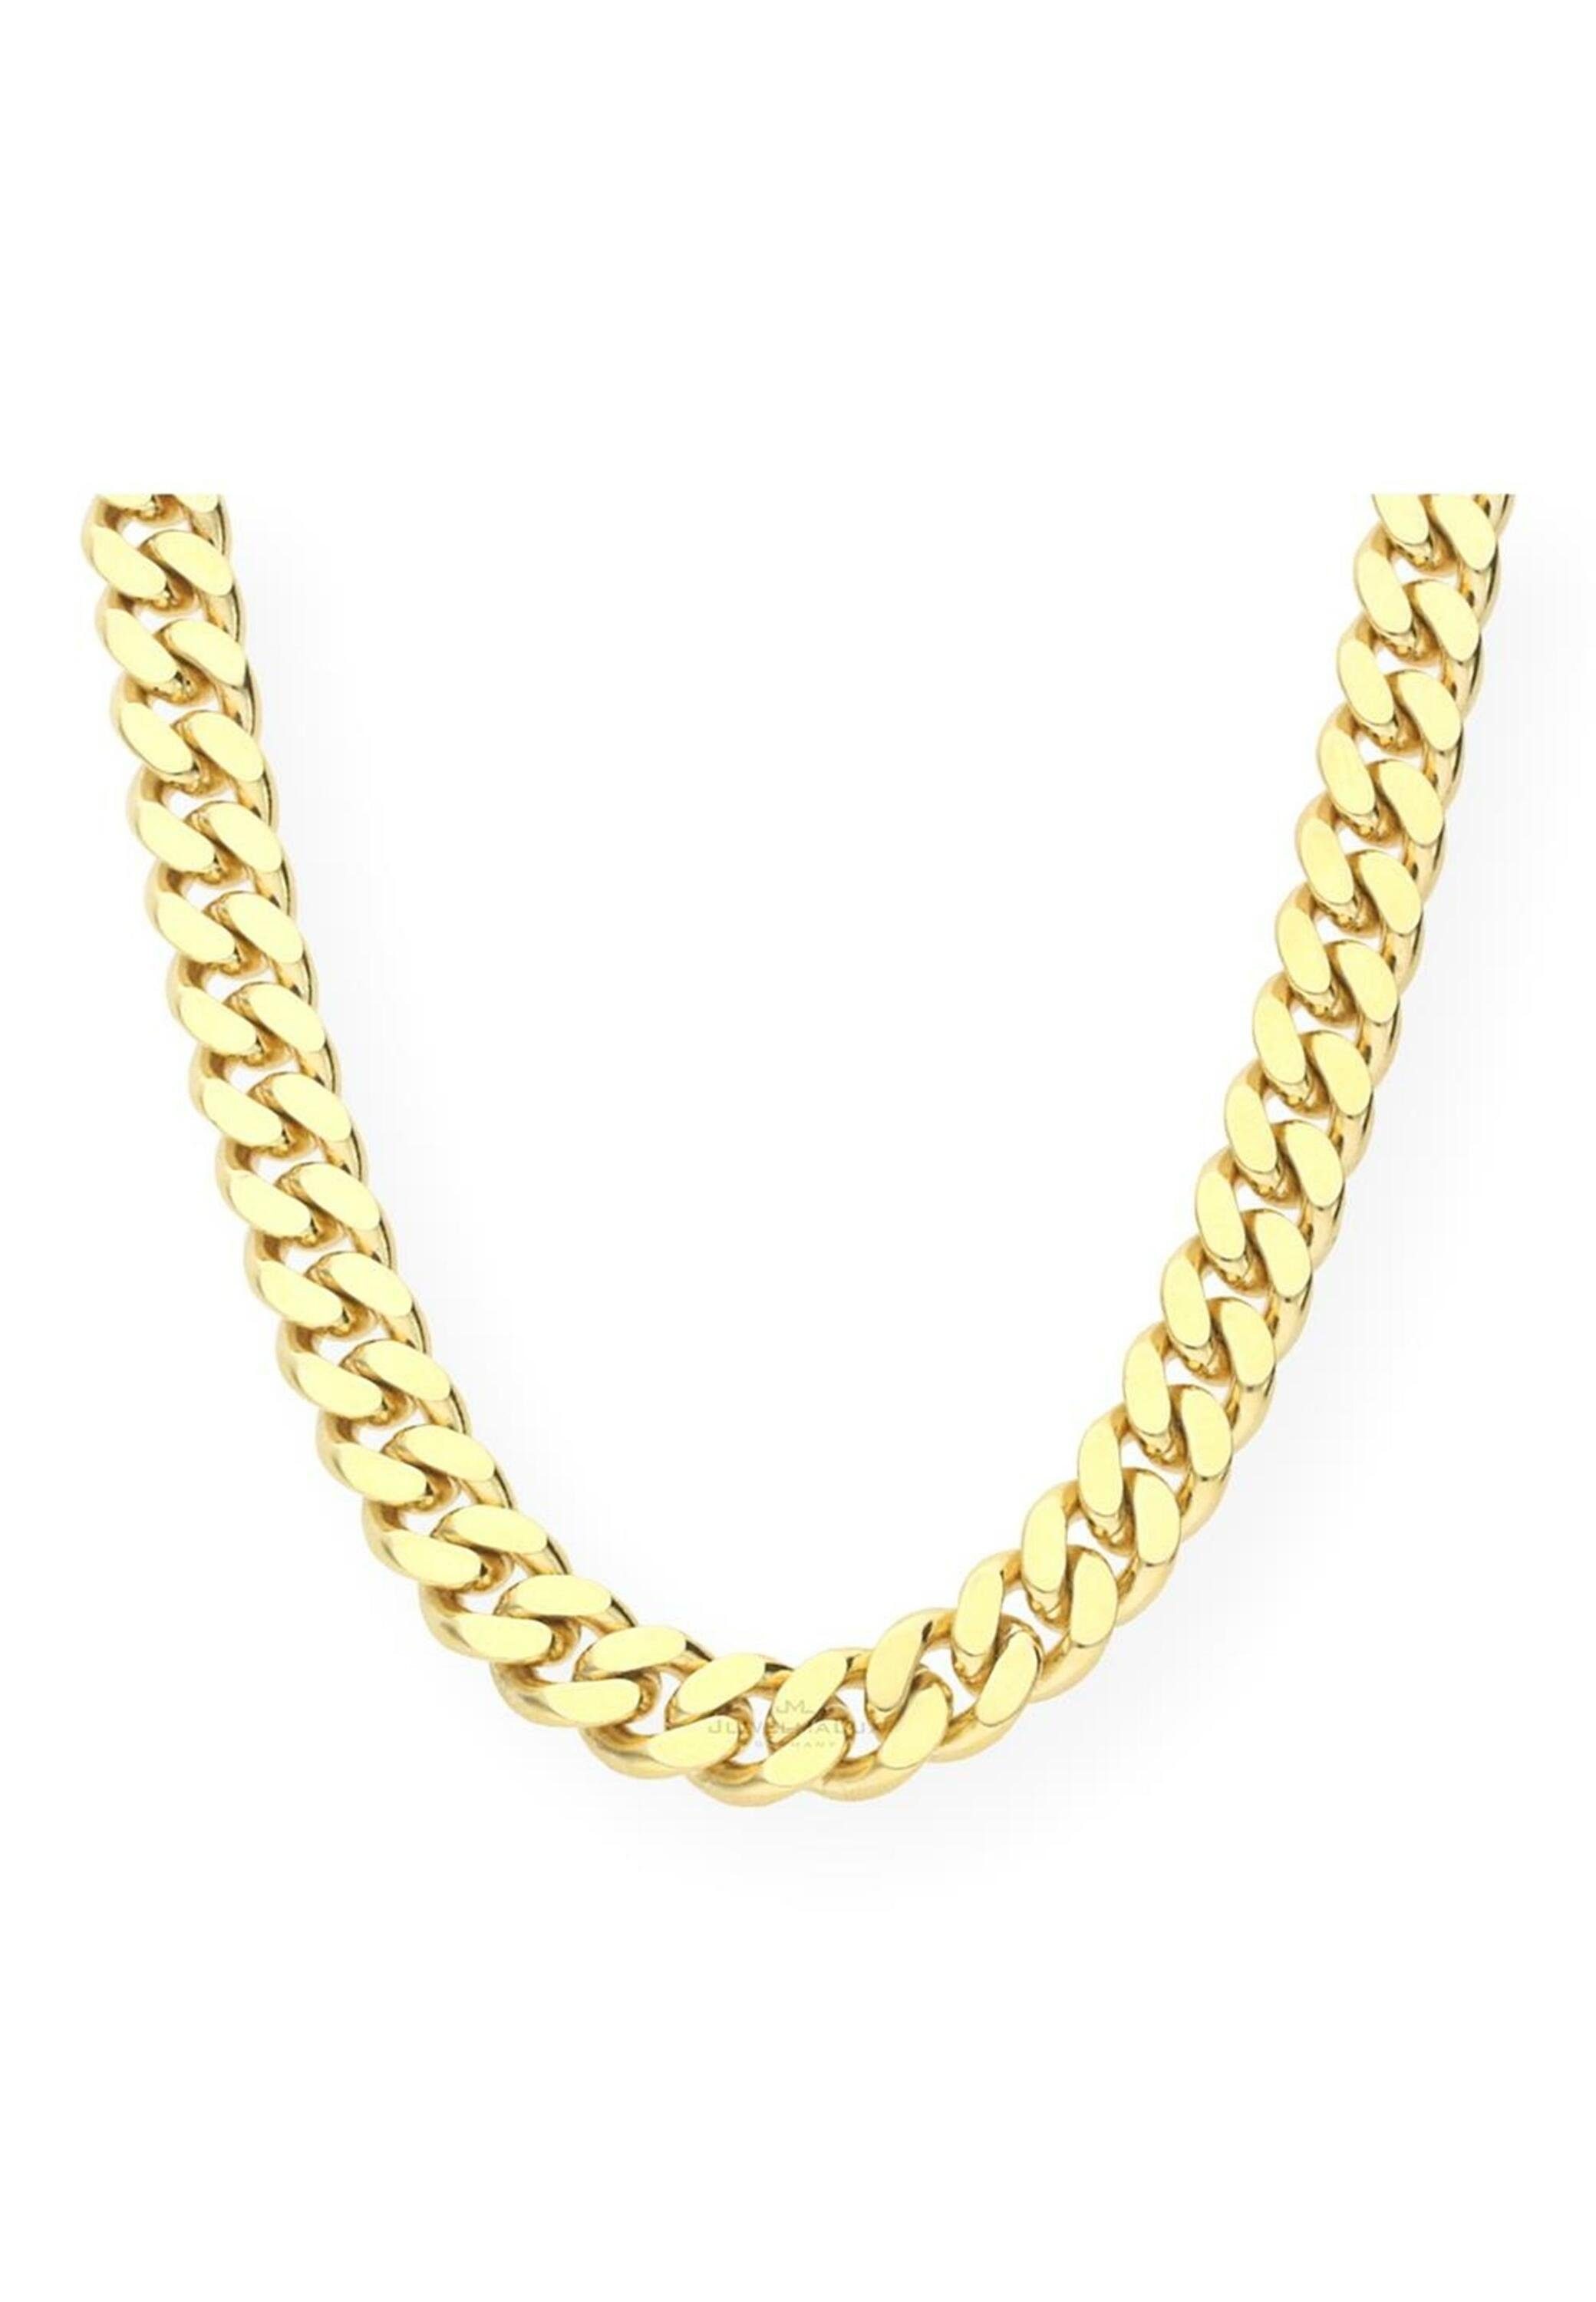 18k Goldkette Kette Edelstahl gold Halskette massiv Panzerkette Herren FREE!!! 